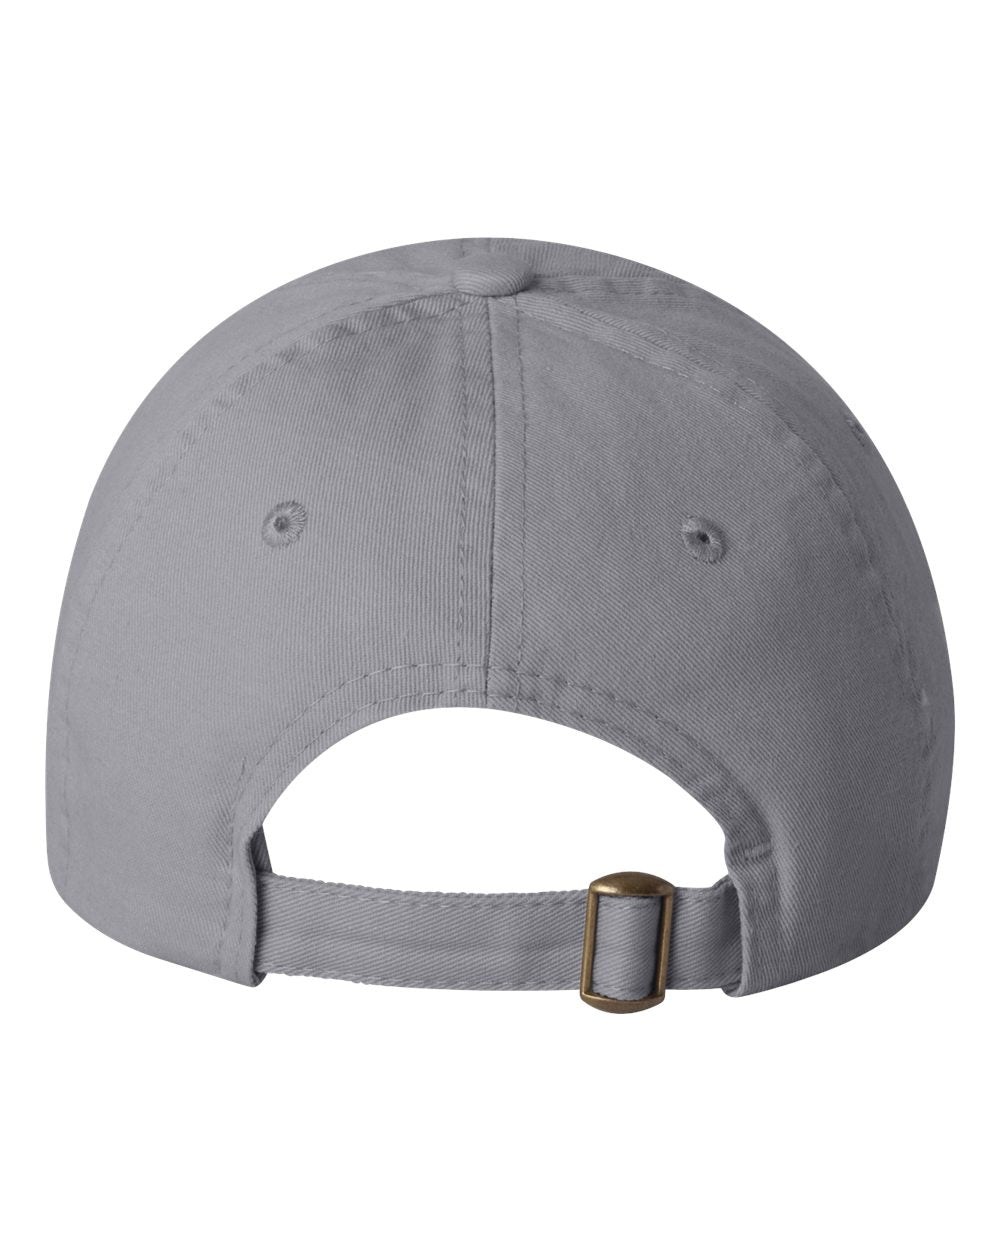 Youth Unisex Cap, Grey